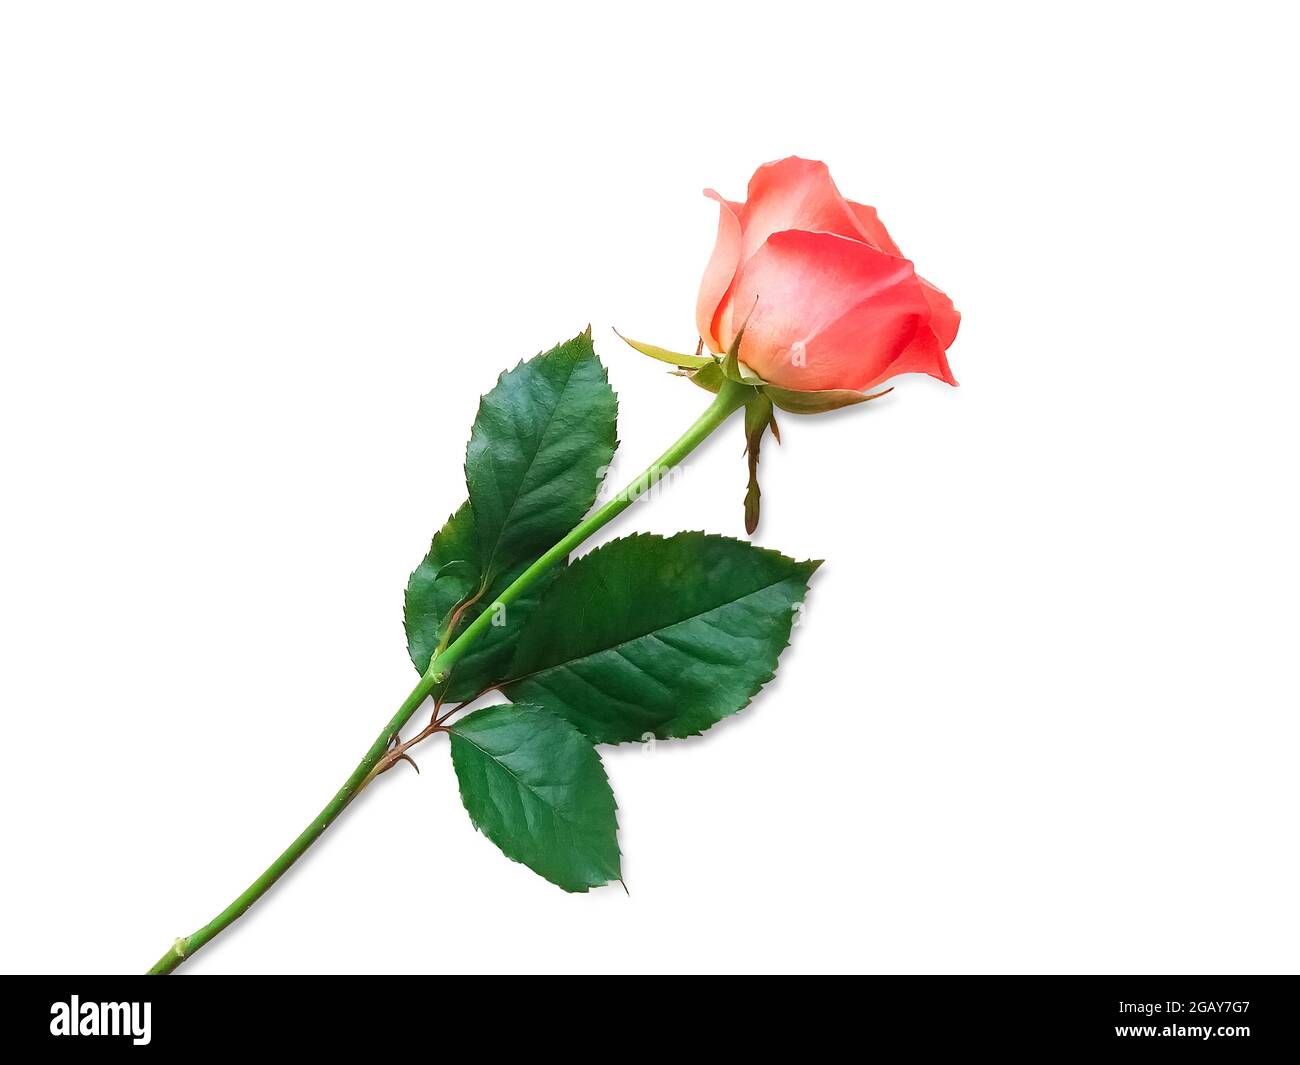 Pink rose isolated on white background Stock Photo